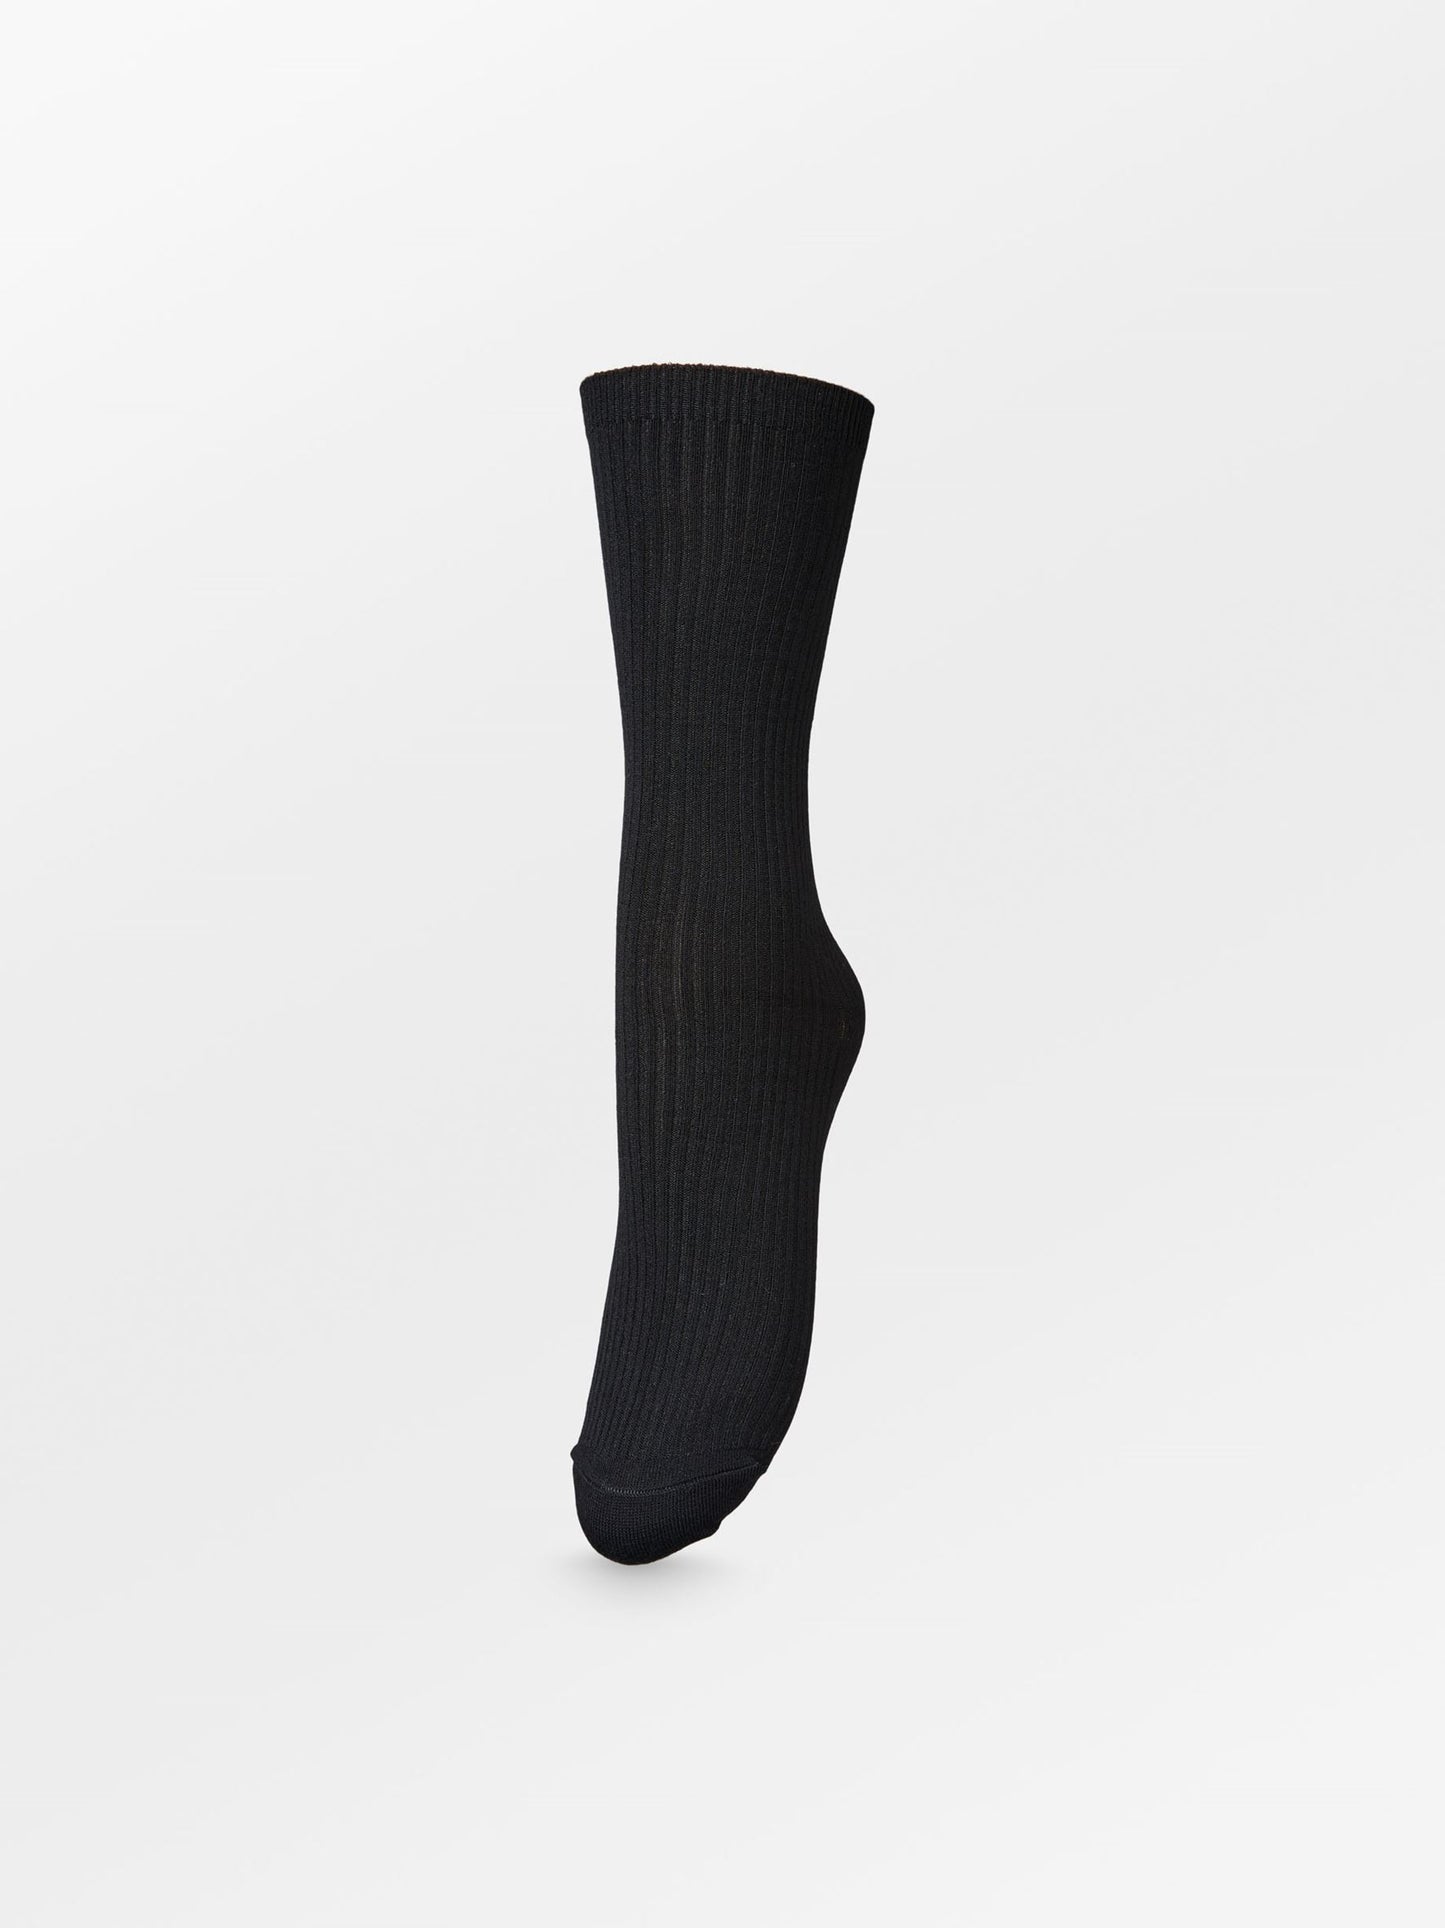 Becksöndergaard, Telma Solid Sock - Black, socks, gifts, socks